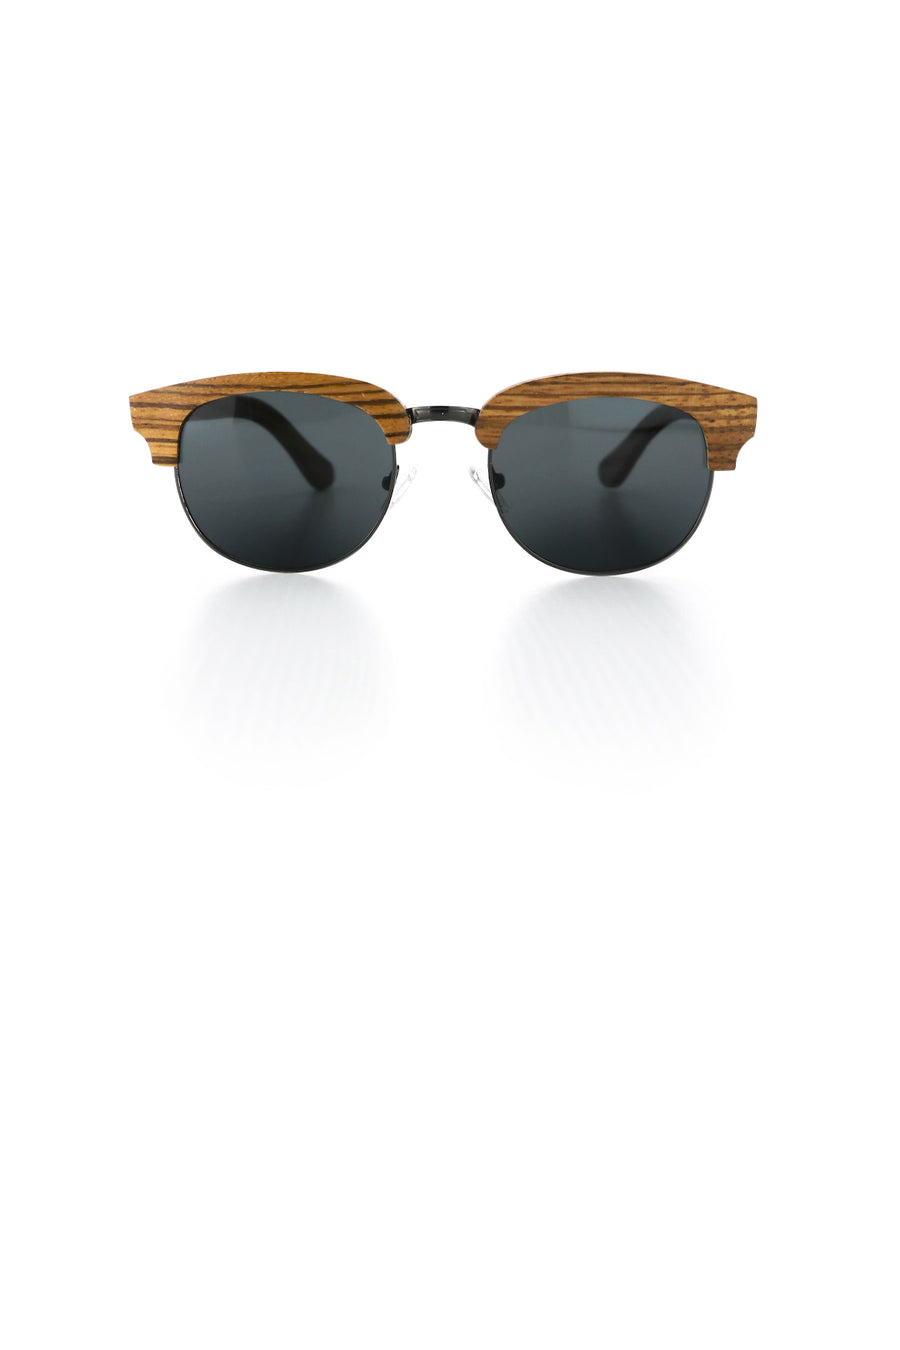 Brown Wood Sunglasses - Max Ted and Lemon